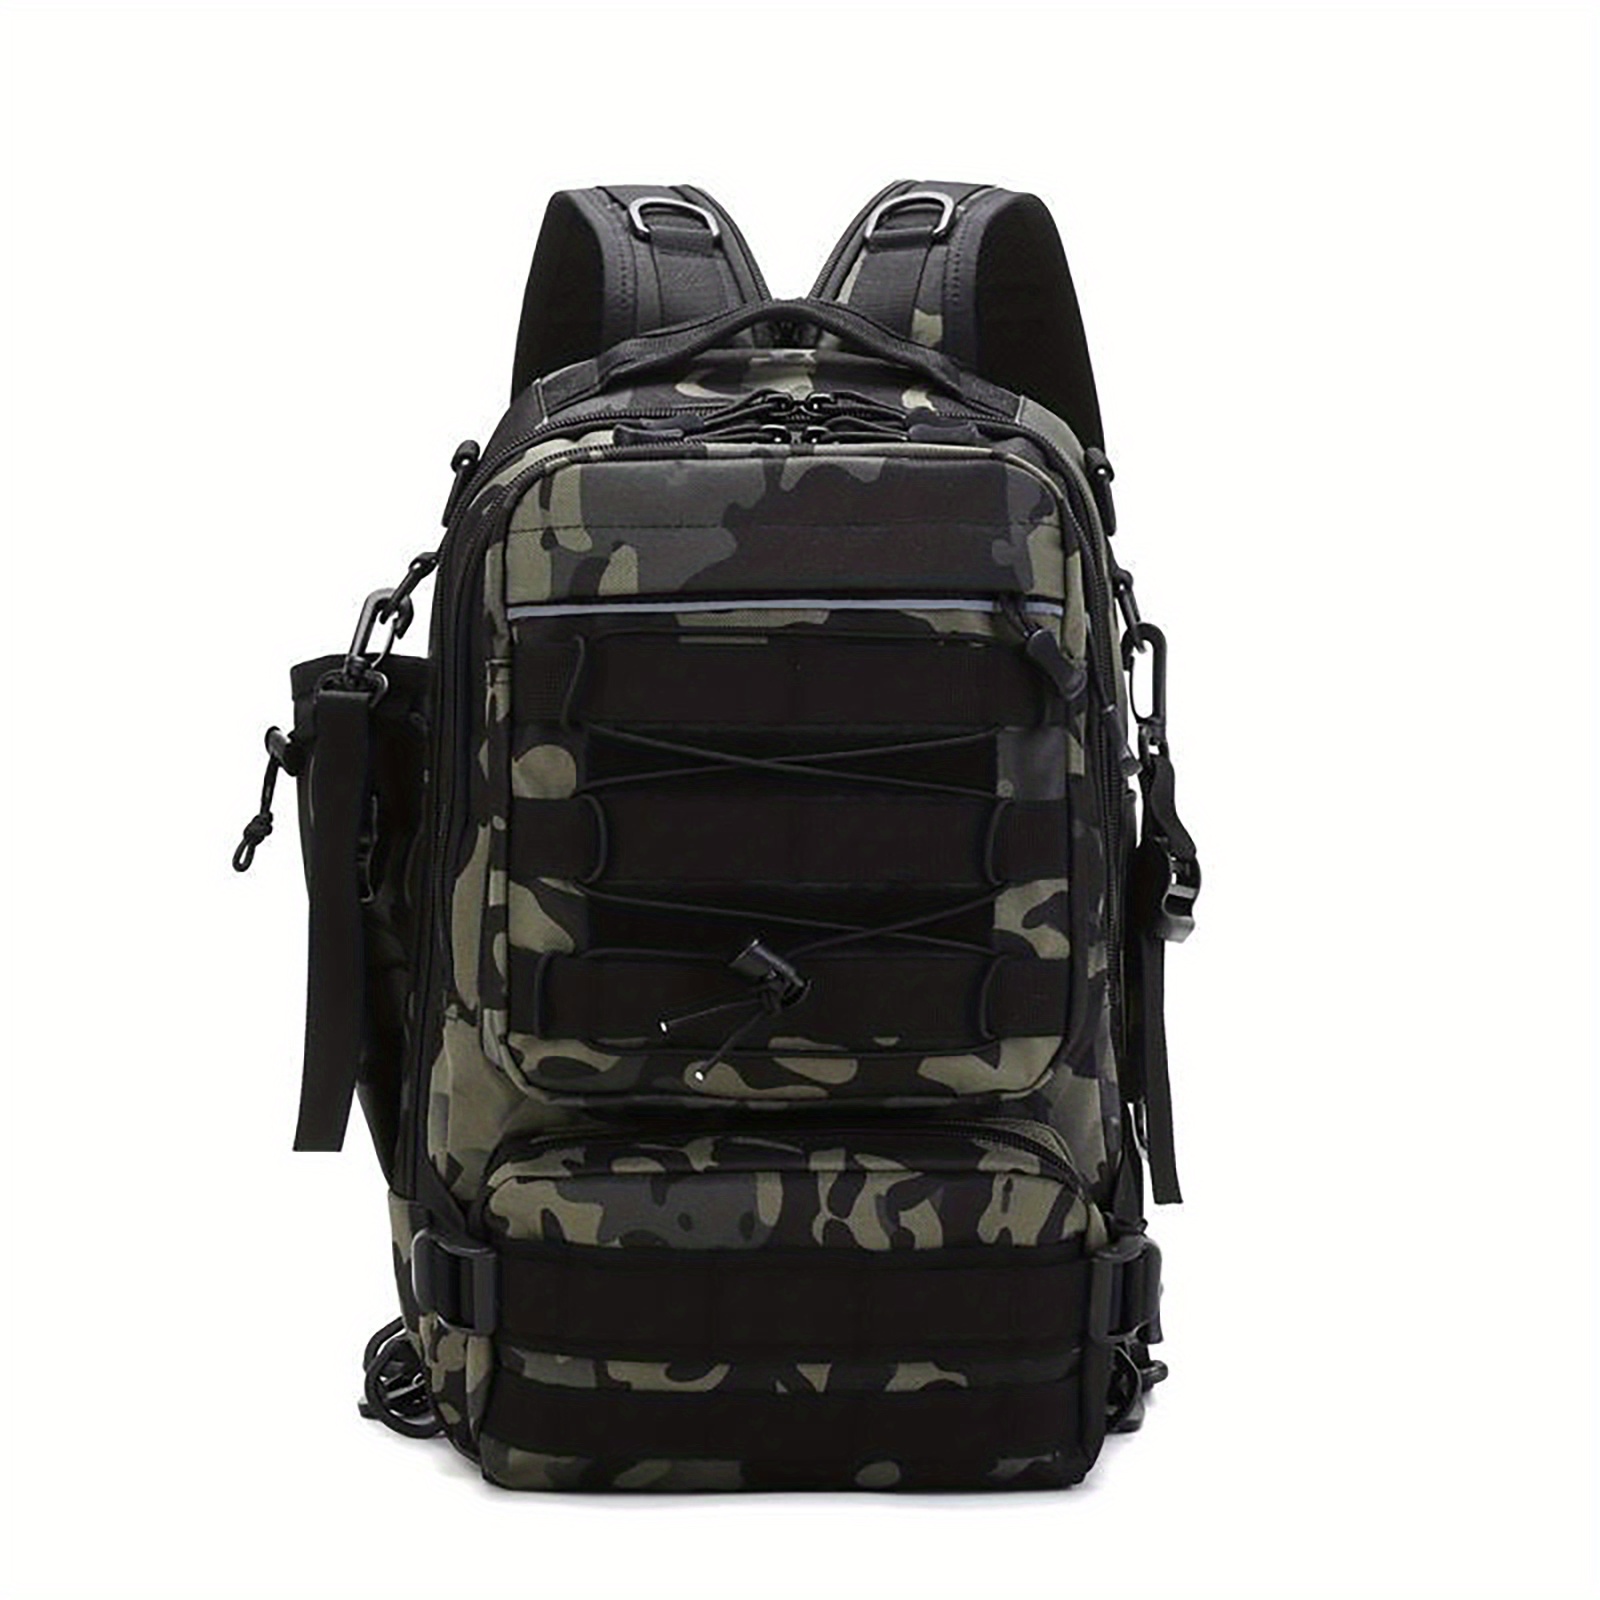 Ametoys Fishing Tackle Backpack Storage Bag Shoulder Backpack Water-Resistant Fishing Gear Bag Cross Body Sling Bag, Adult Unisex, Size: Camouflage-2